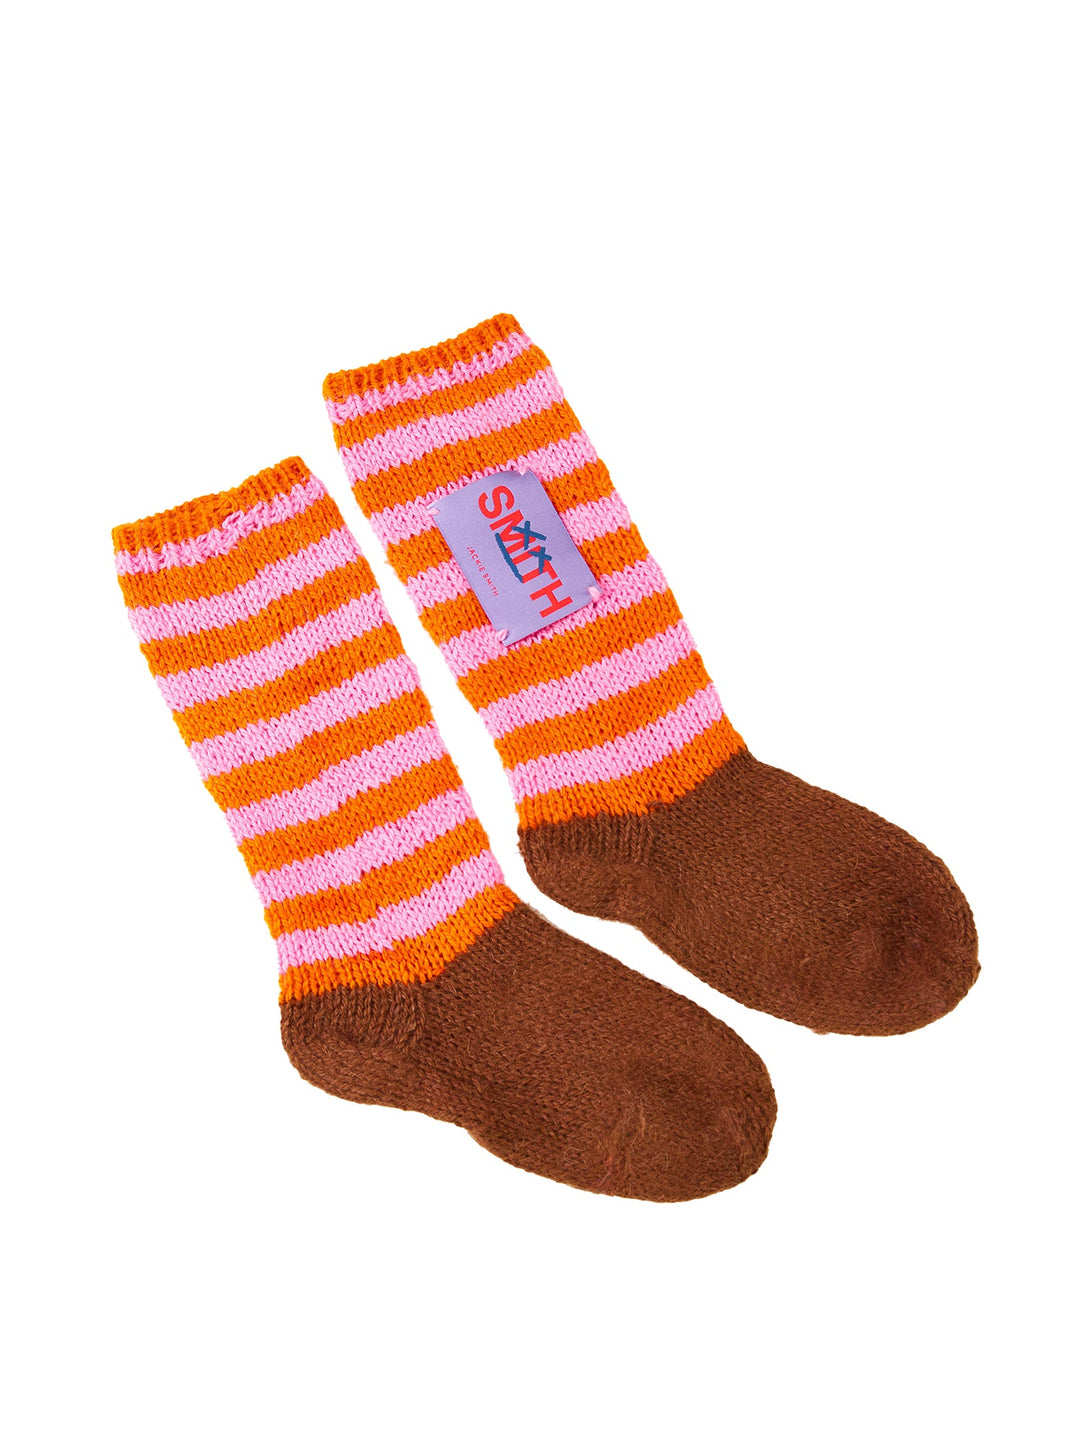 Carnavalito Hand Knitted Socks